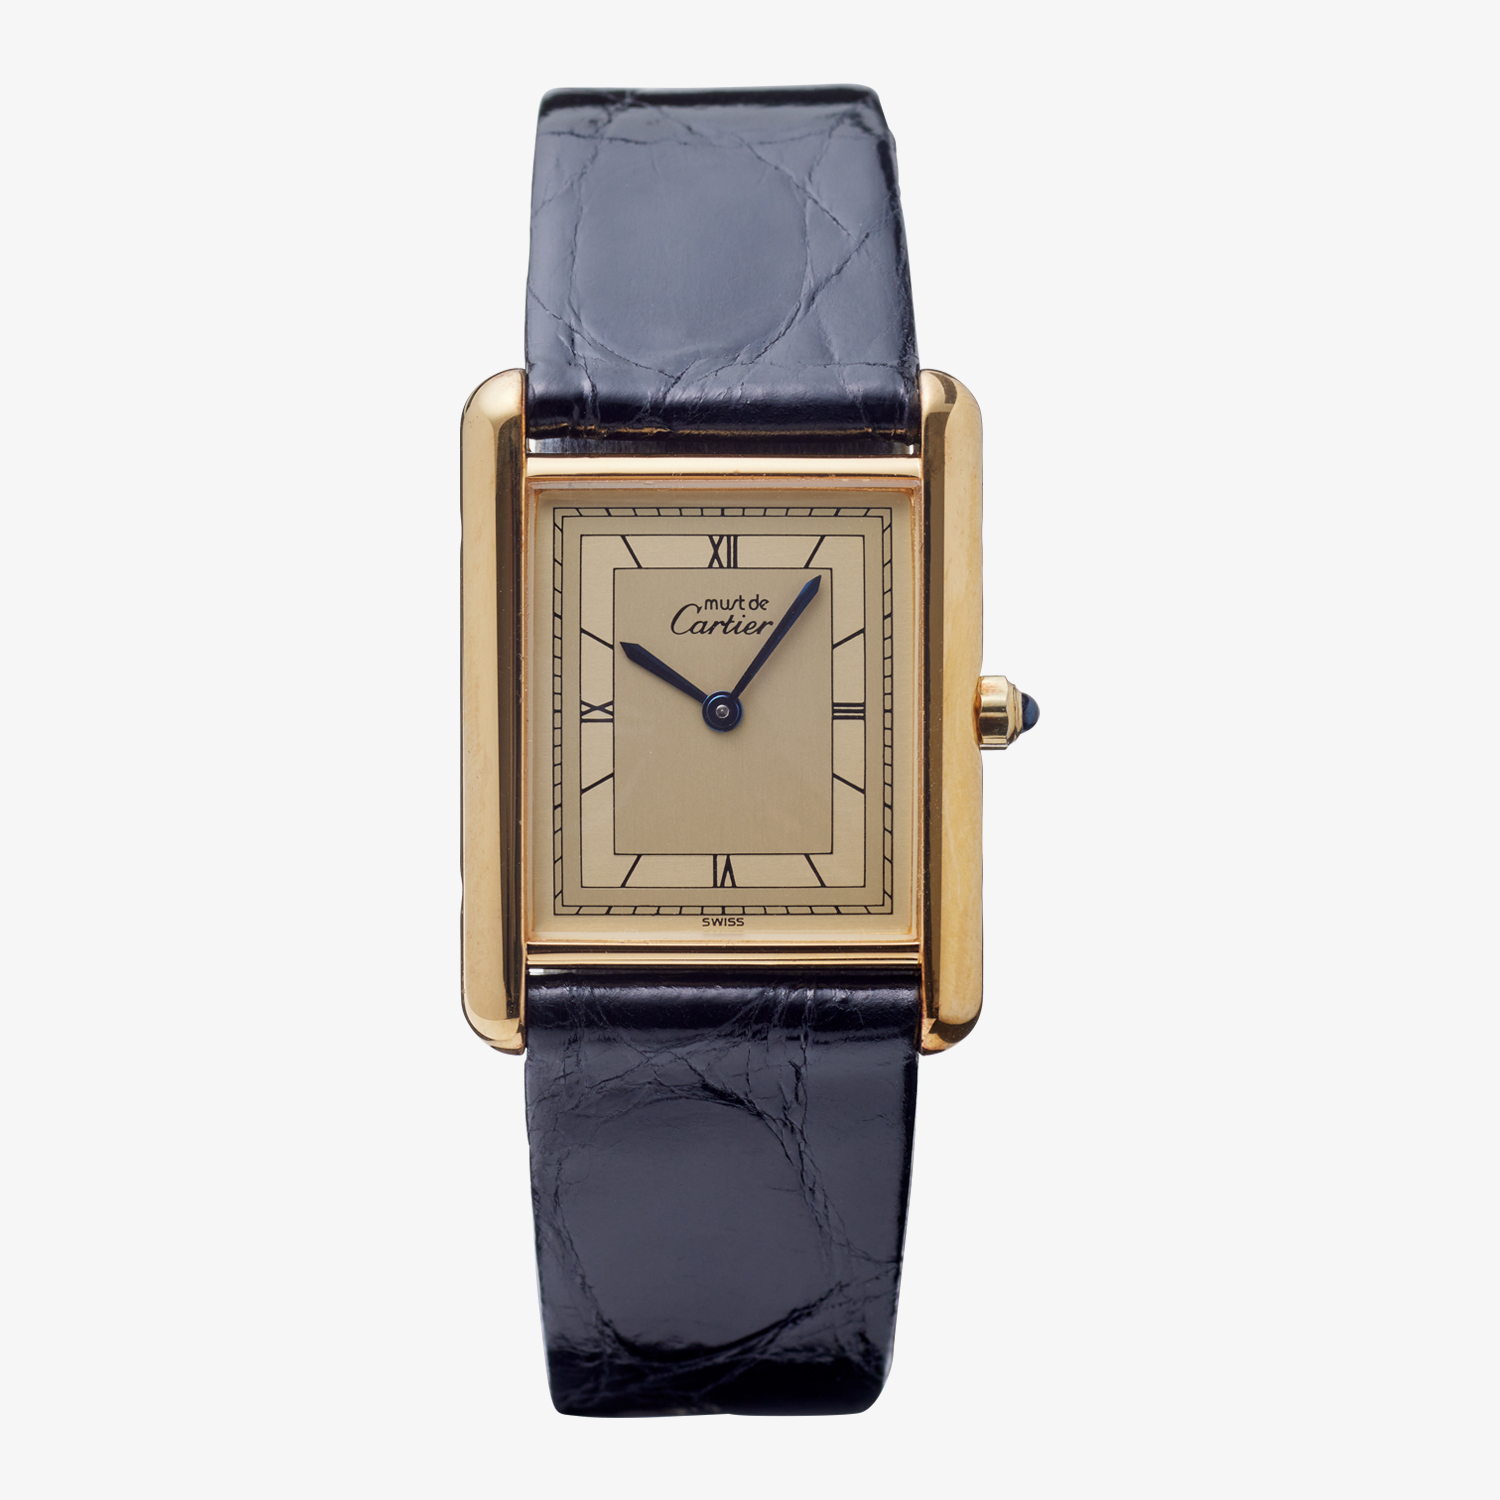 Cartier｜must de Cartier TANK LM｜＜Light＞ Four Point Roman Dial ｜Ivory - 90's｜Cartier (Vintage Watch)